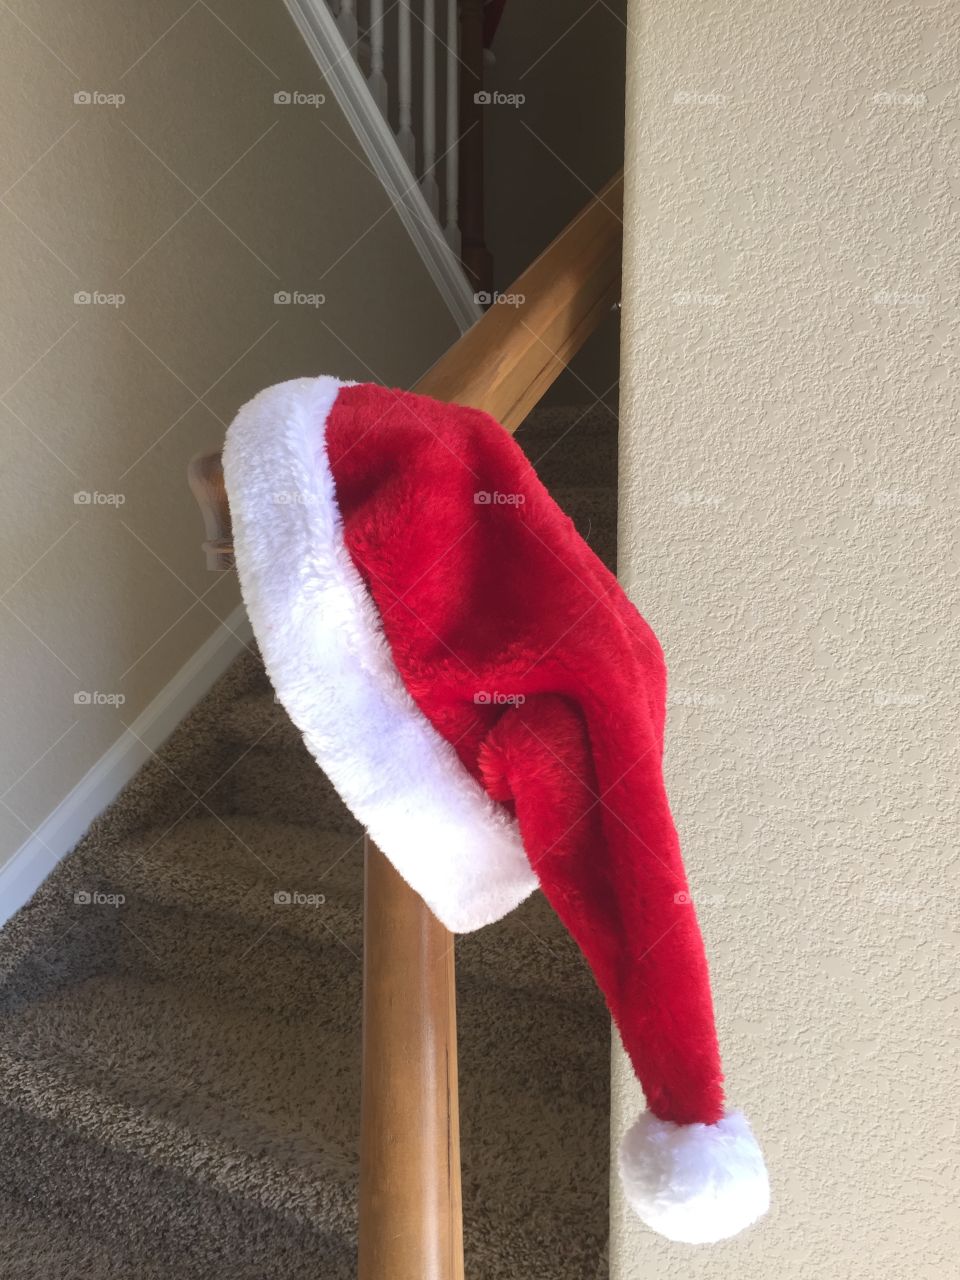 Santa left his hat